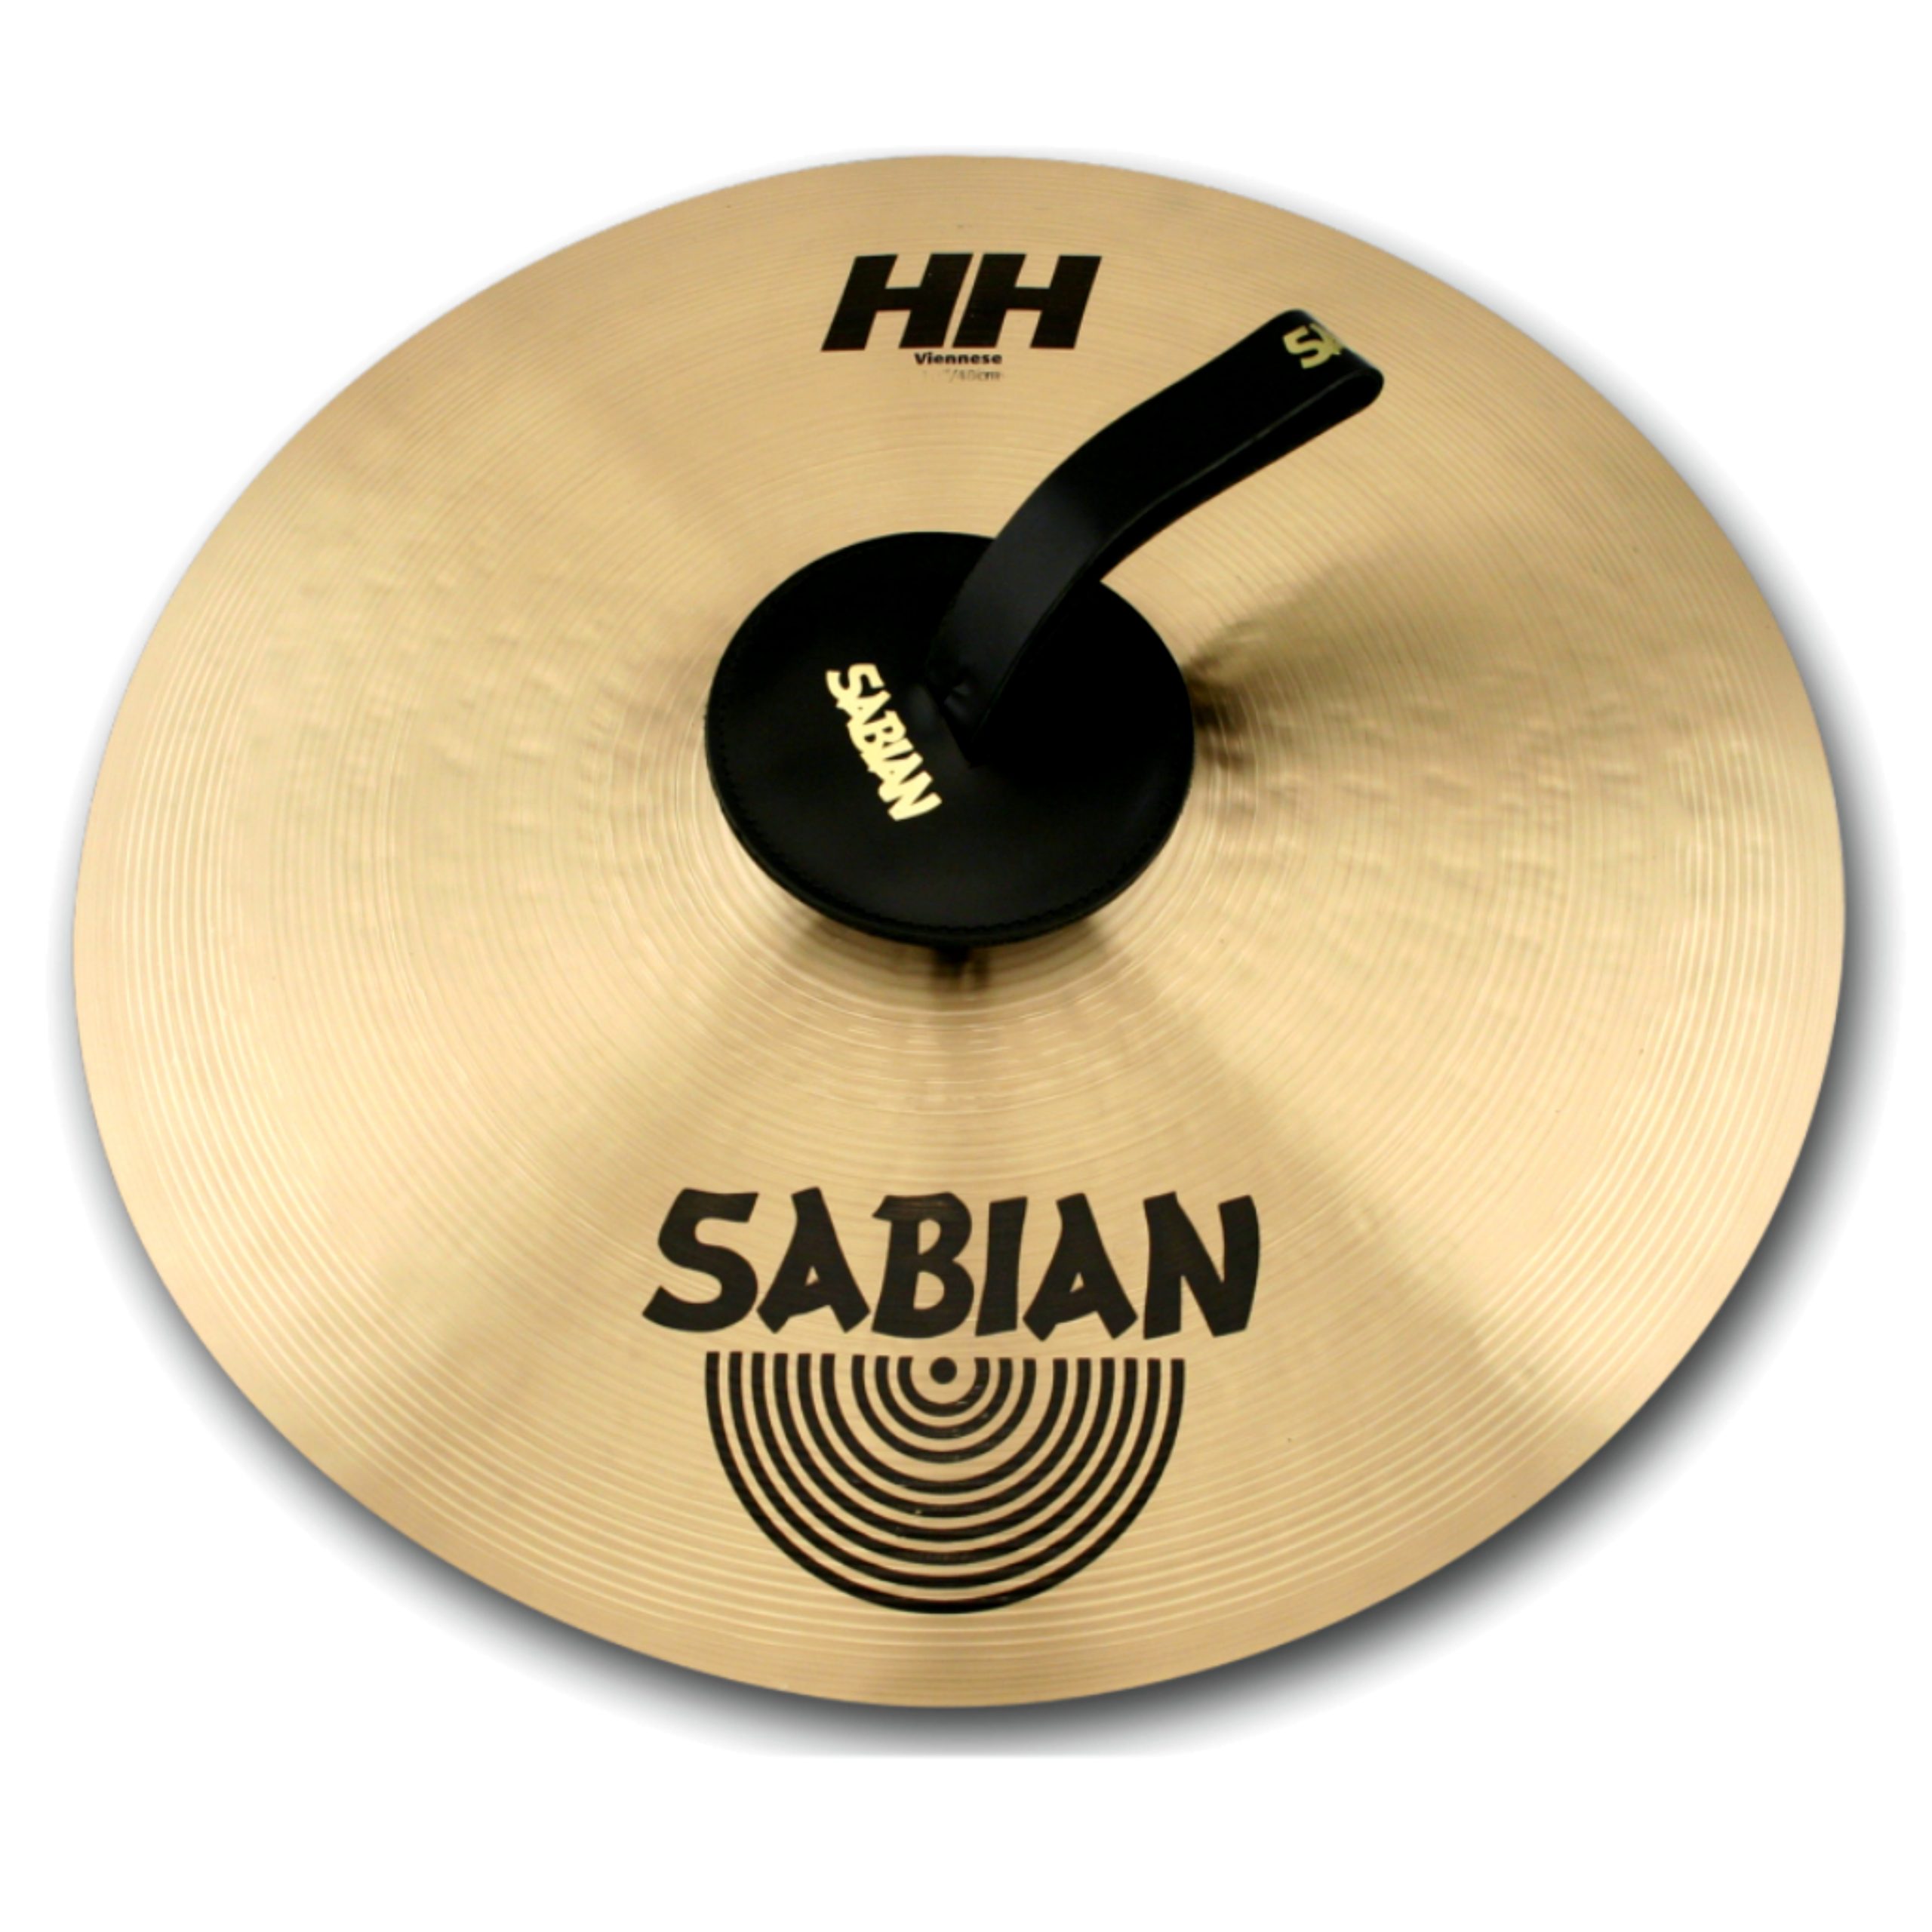 Sabian 18" HH Orchestral-Band Viennese pair